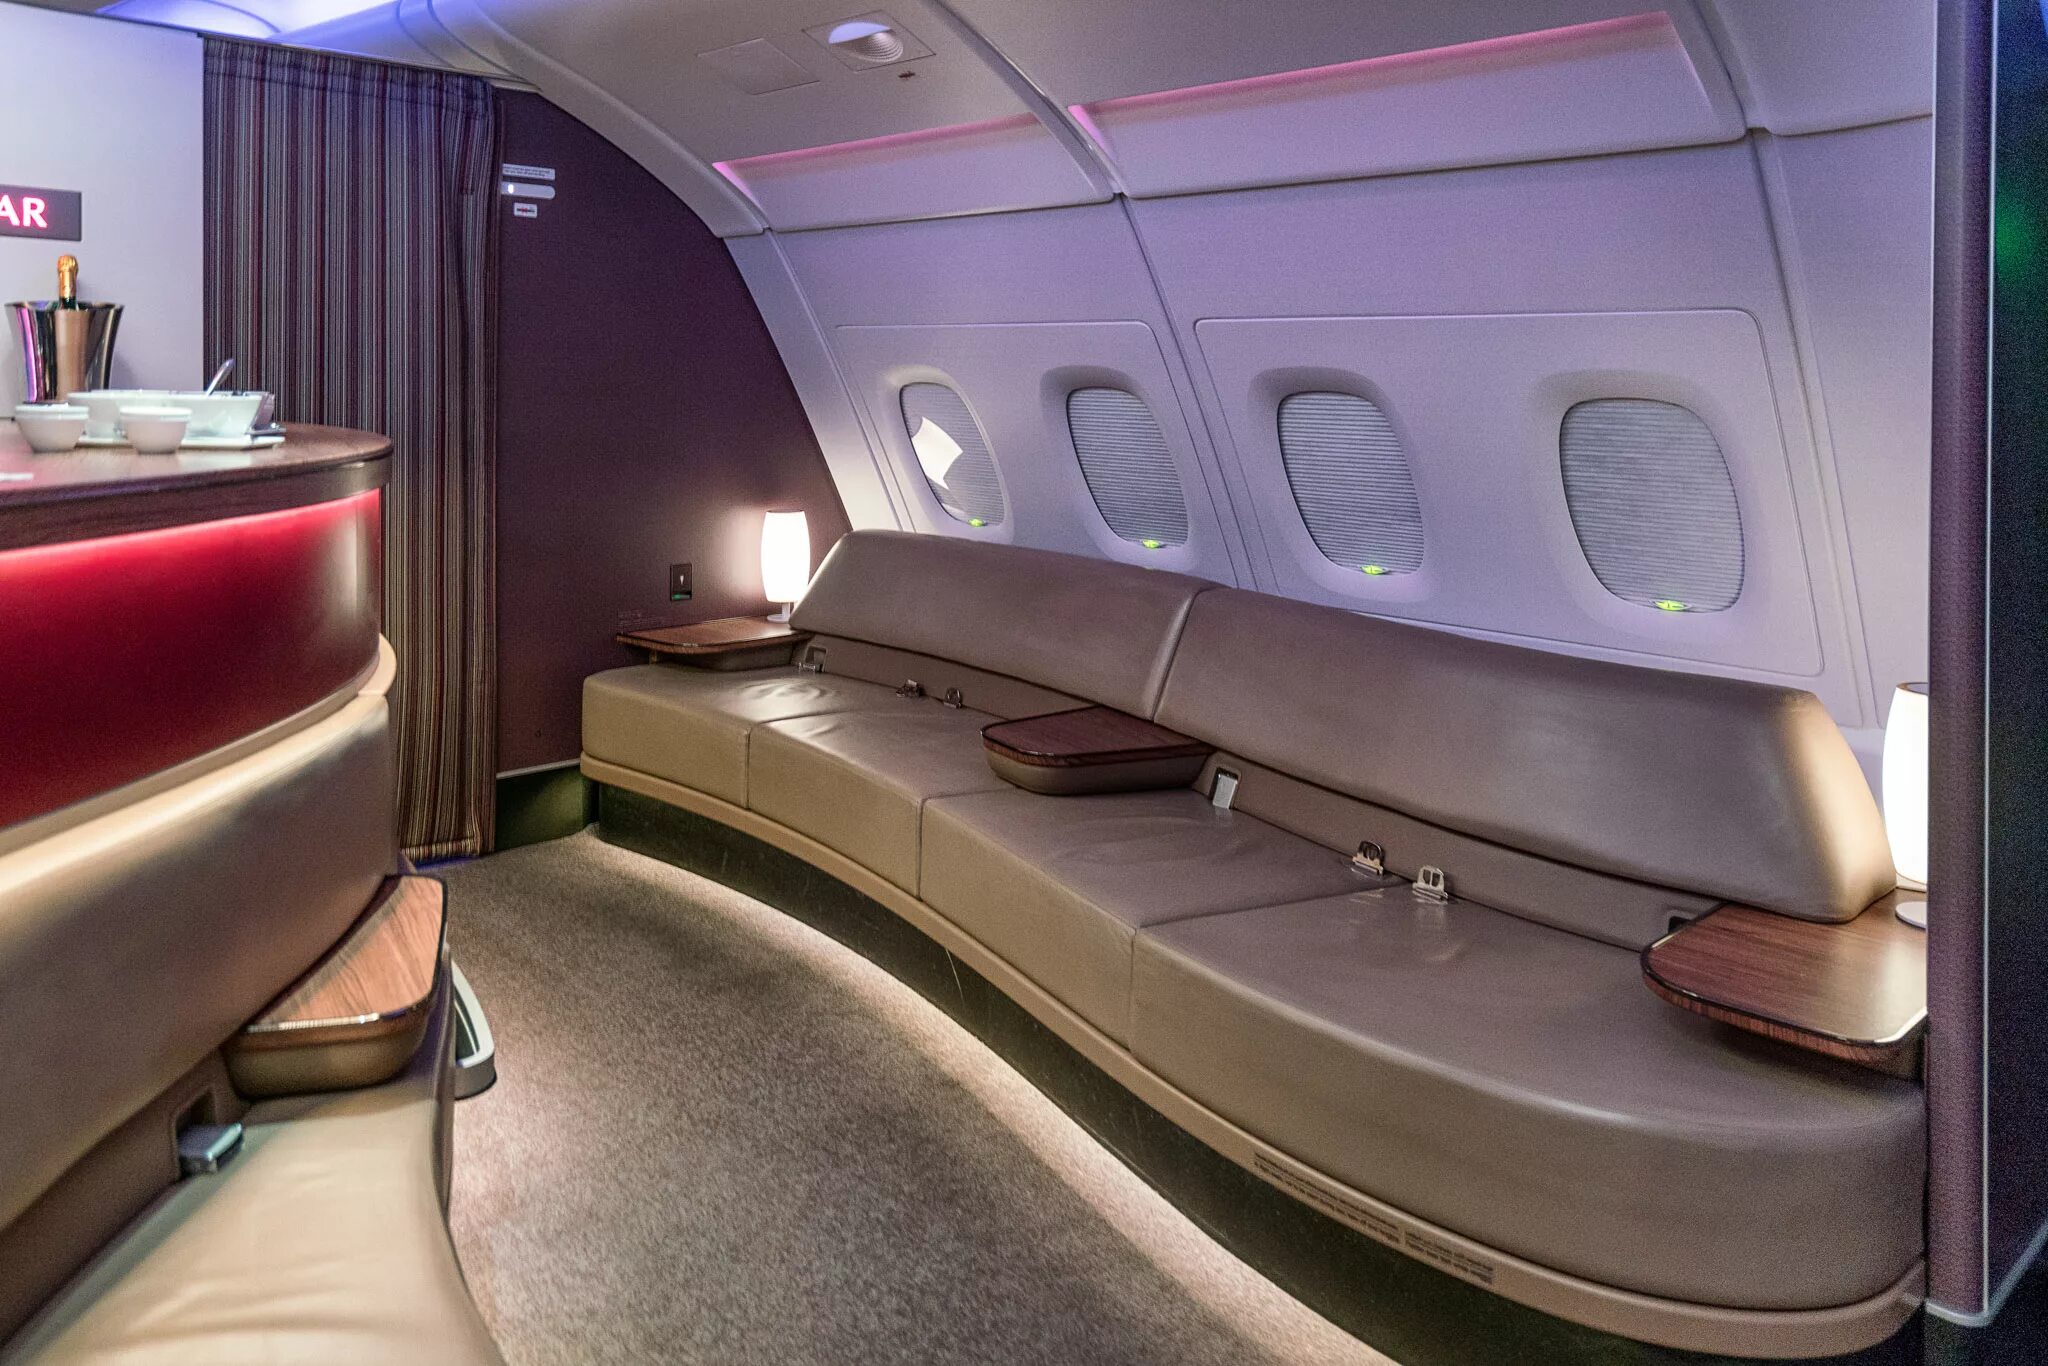 First class Qatar Airlines a380. Airbus a380 Qatar Airways первый класс. A380 Qatar Airways первый класс. S7 380 внутри.